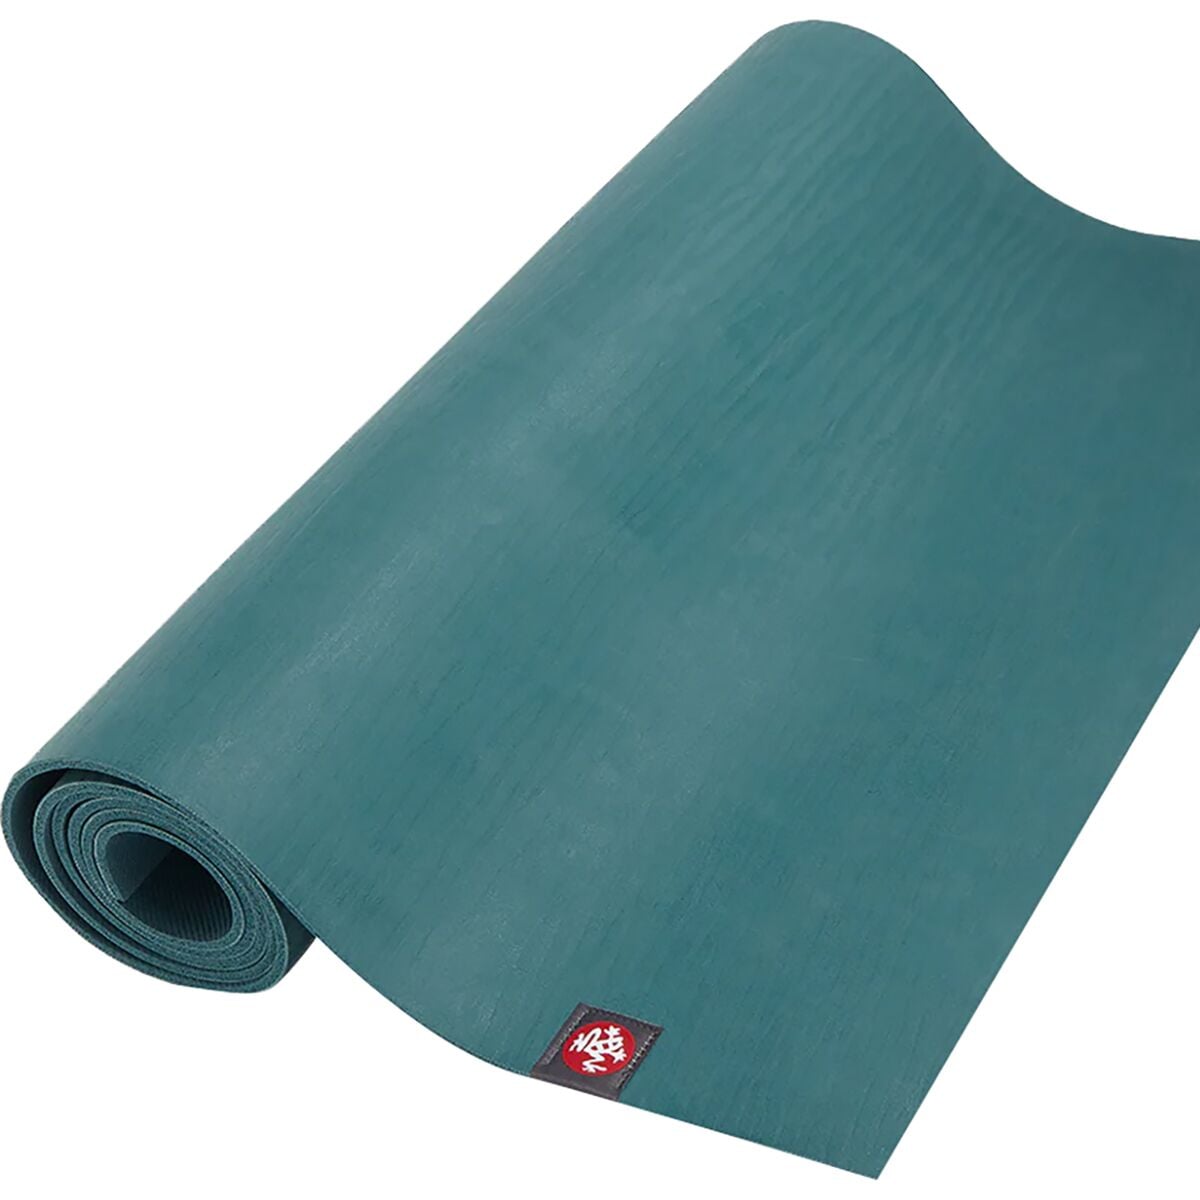 Yoga Mat 5mm - eKO®, yoga mat